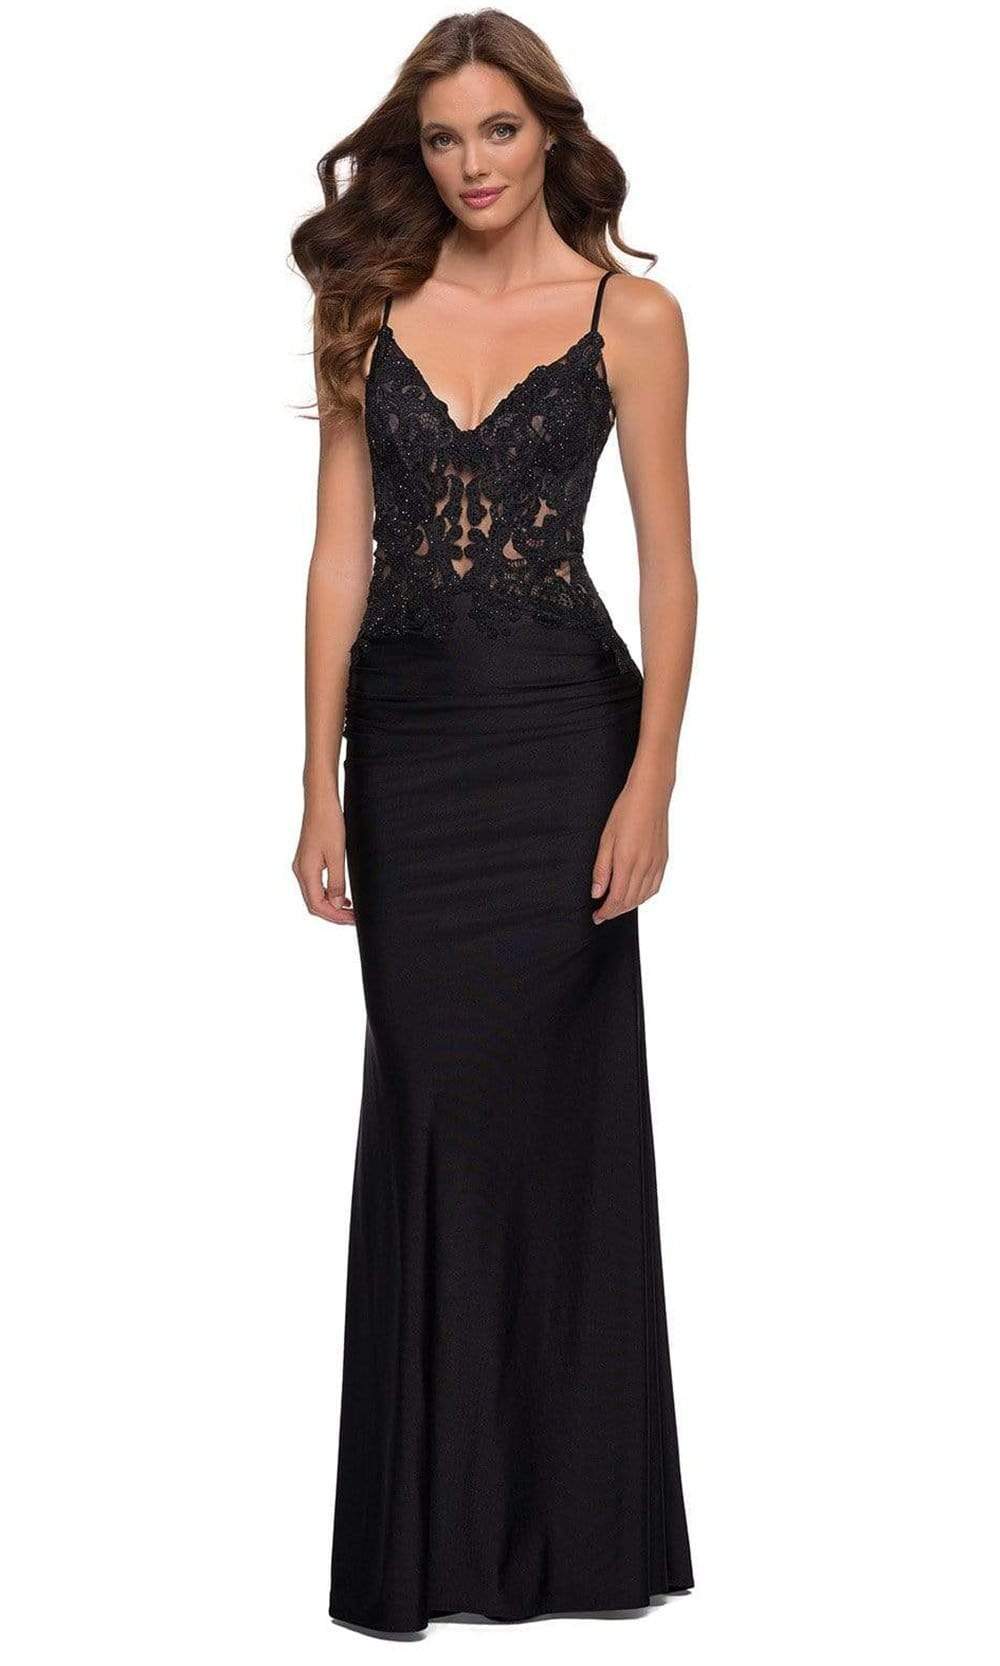 La Femme - 29774 Plunging V-Neck Lace Sheath Plus Size Prom Dress
